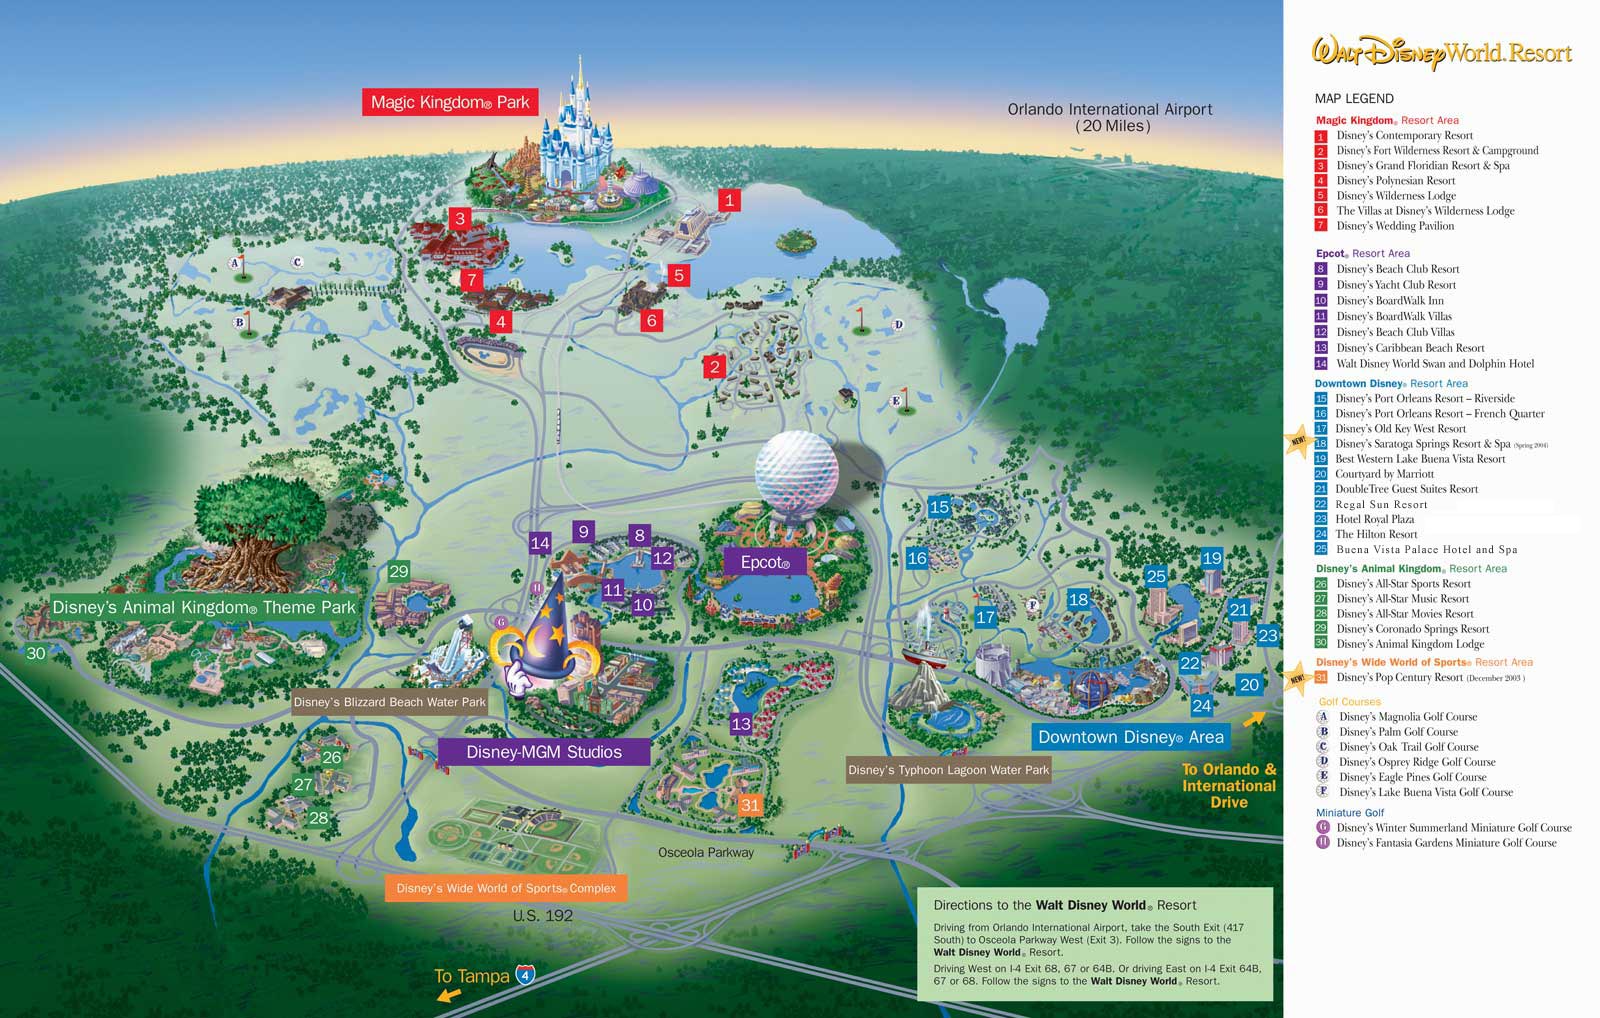 Disneyworld Map. Disney World Map. Map of the Disney World in Orlando